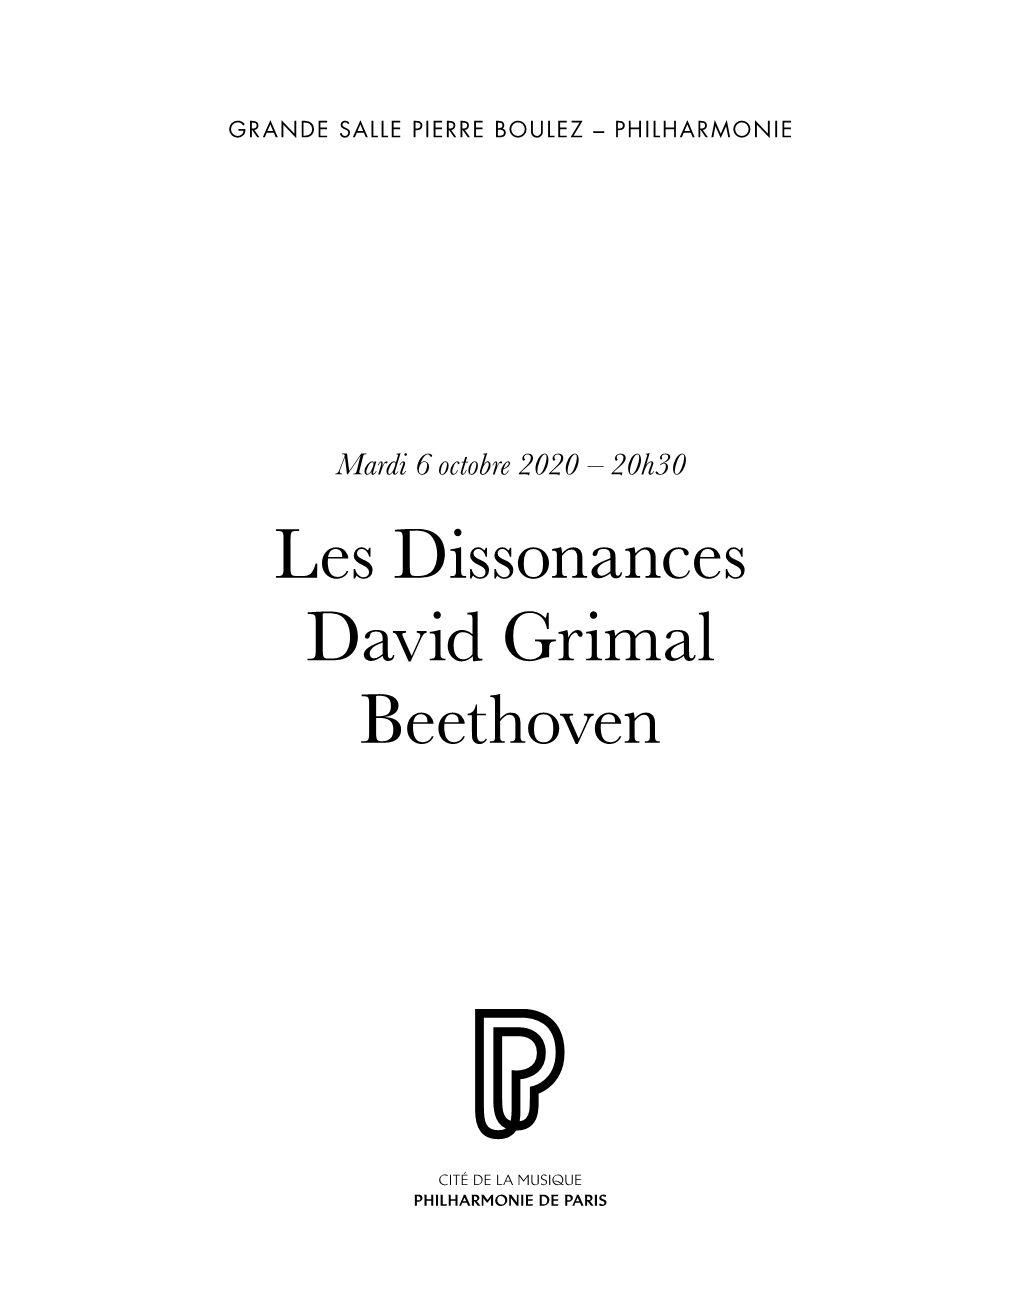 Les Dissonances David Grimal Beethoven